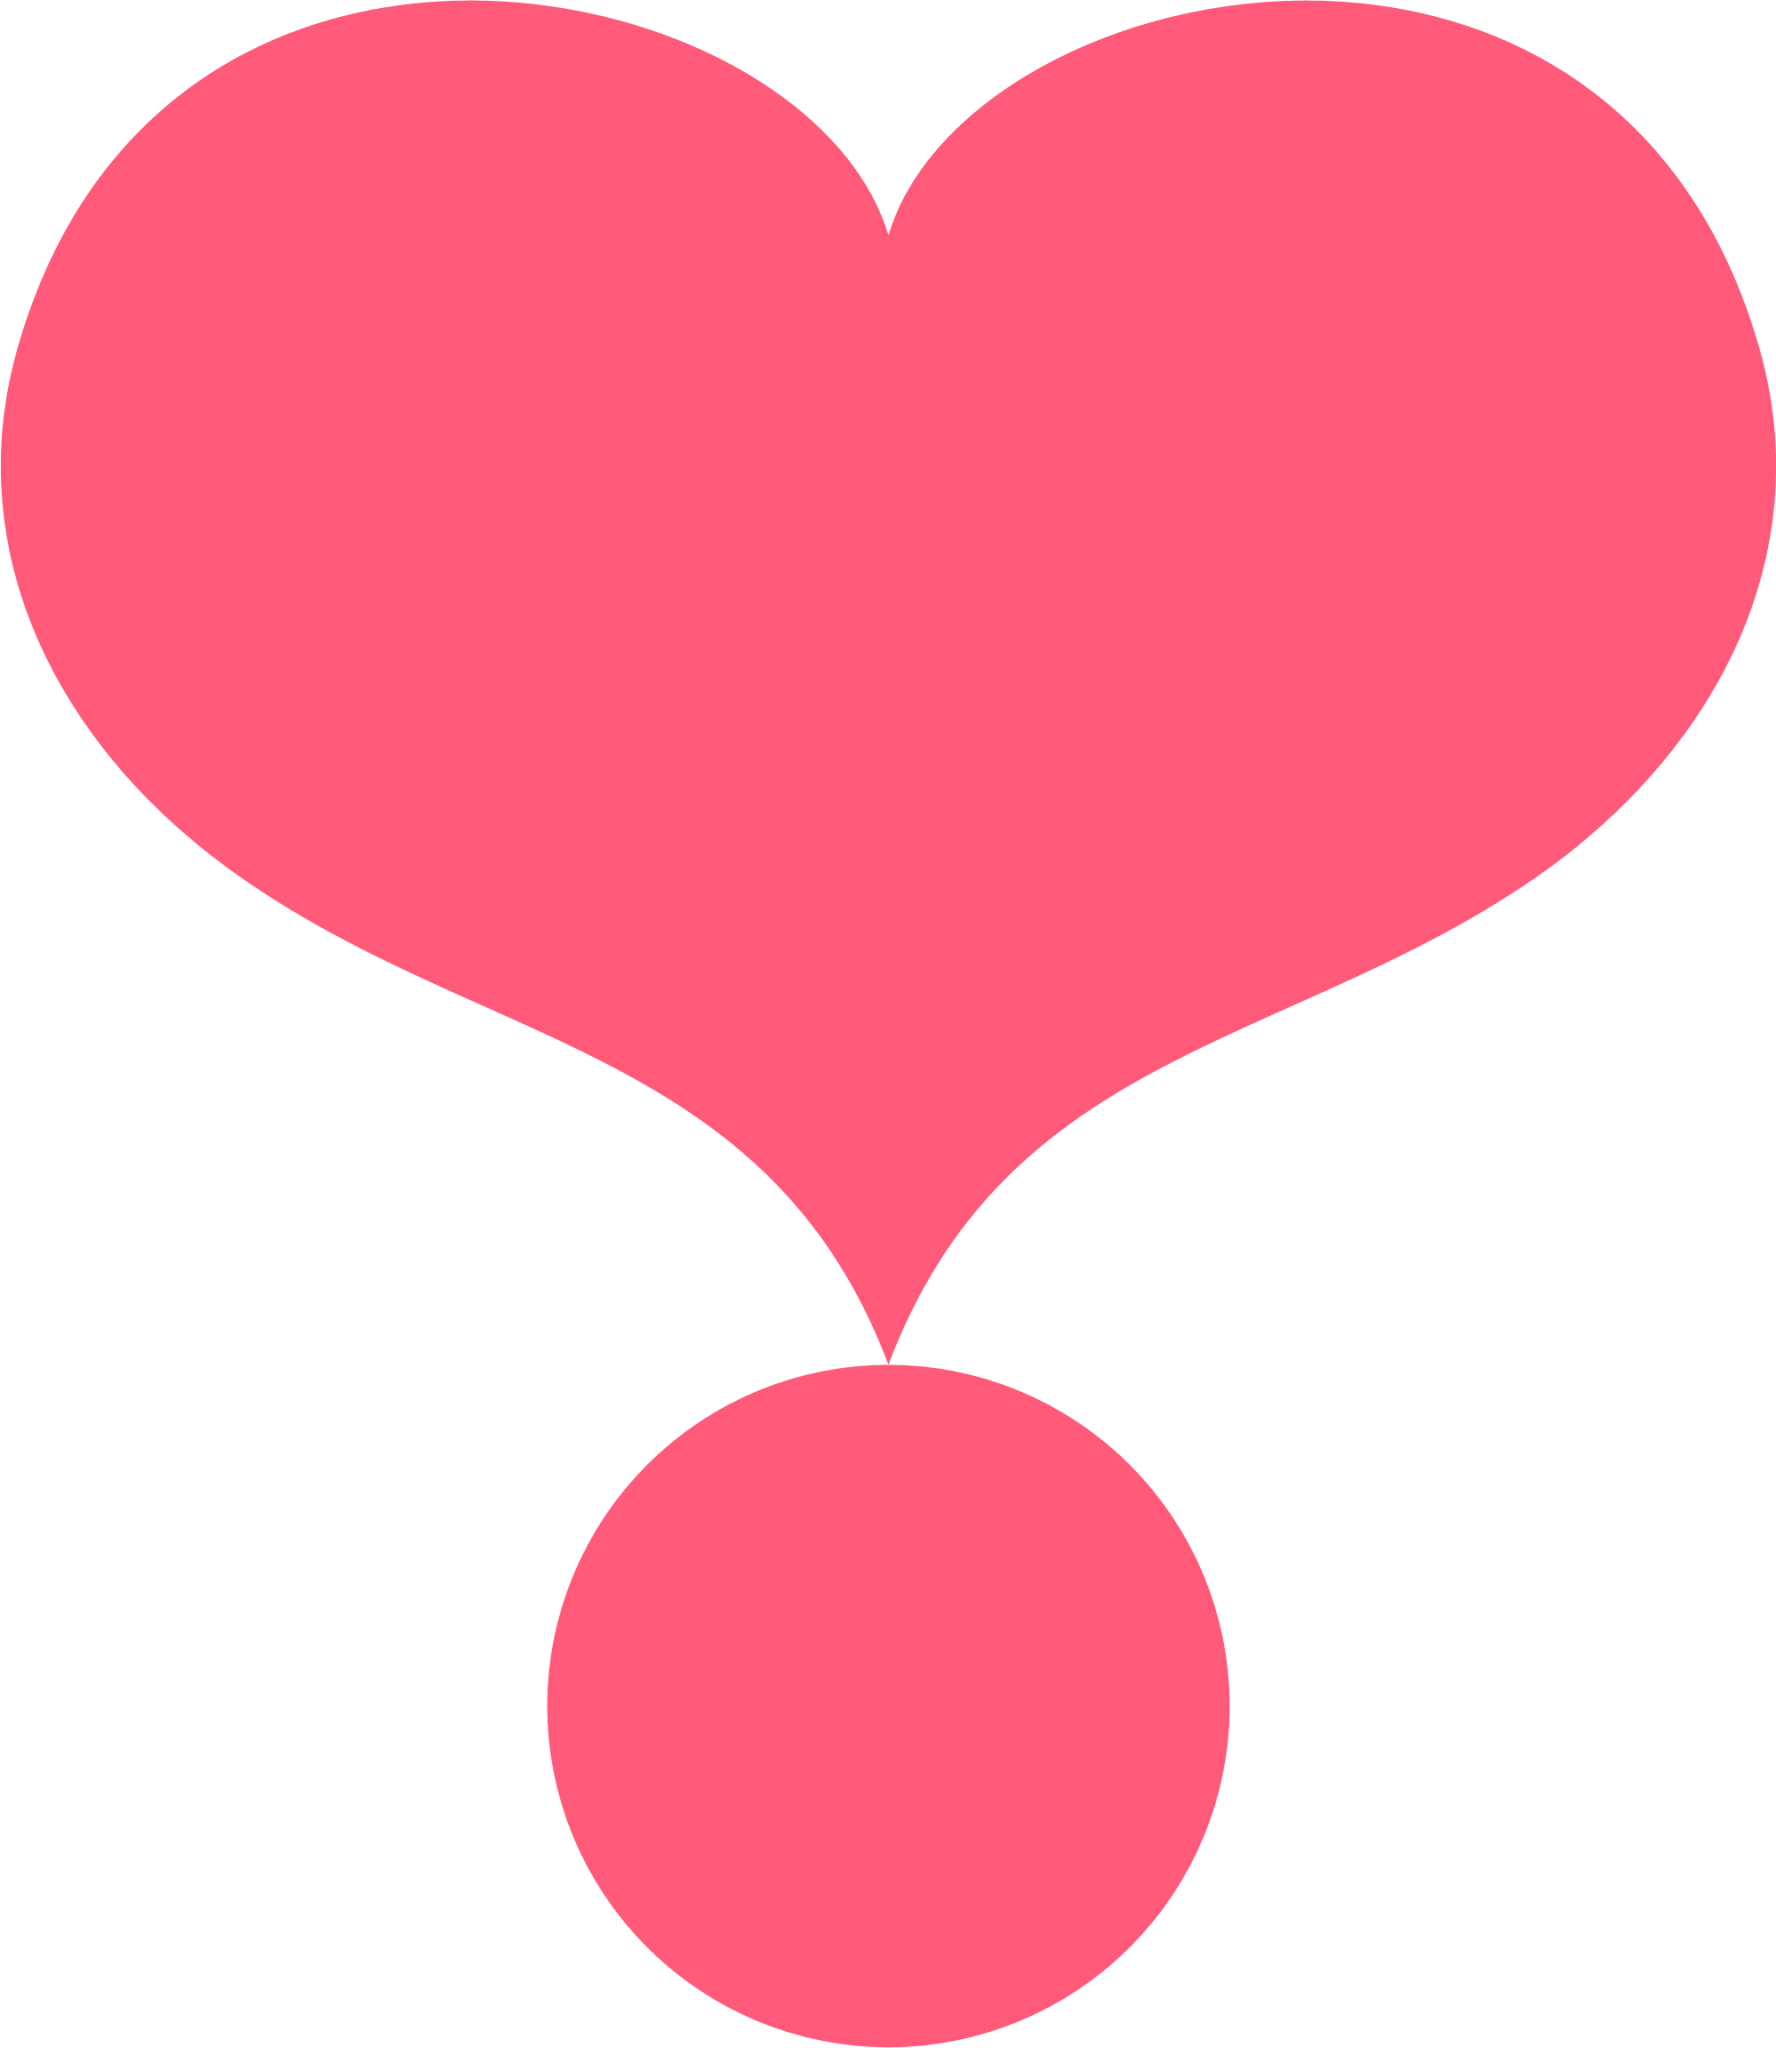 heavy heart exclamation mark ornament emoji